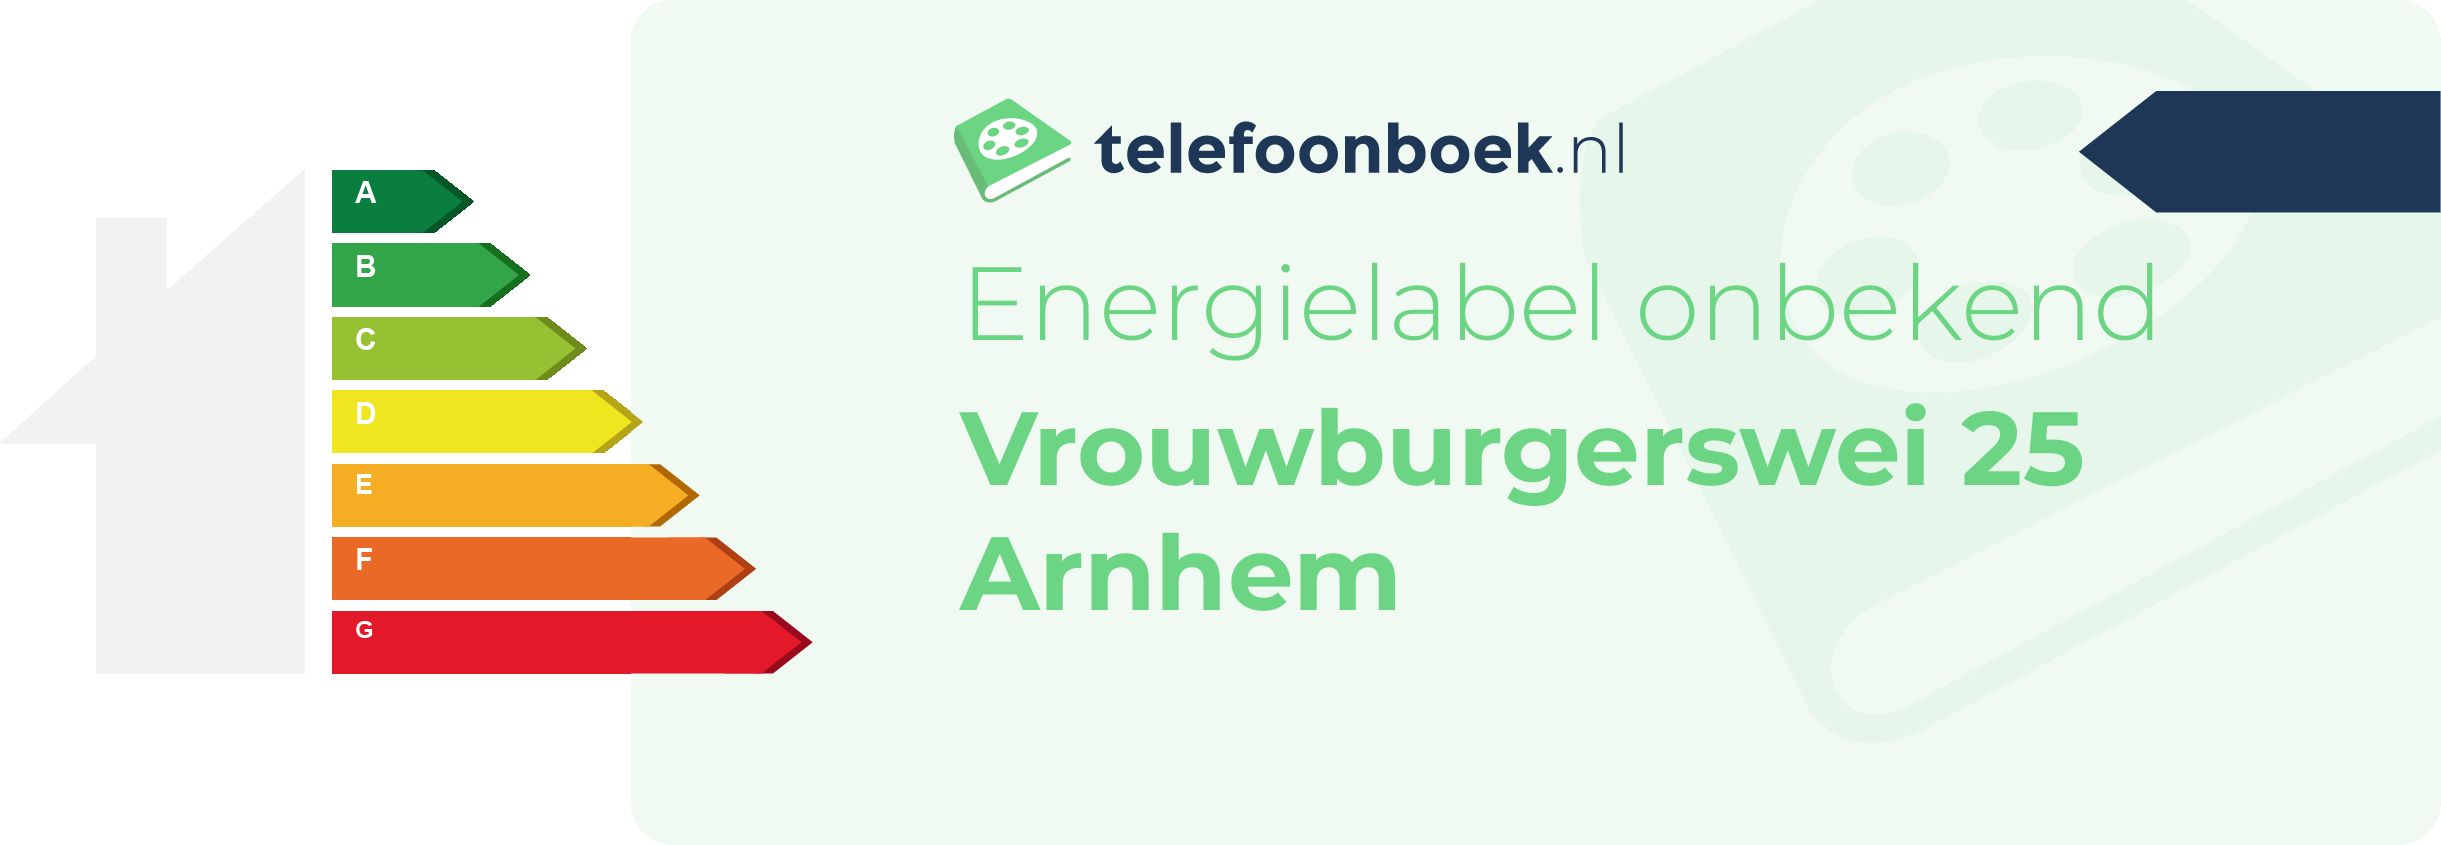 Energielabel Vrouwburgerswei 25 Arnhem